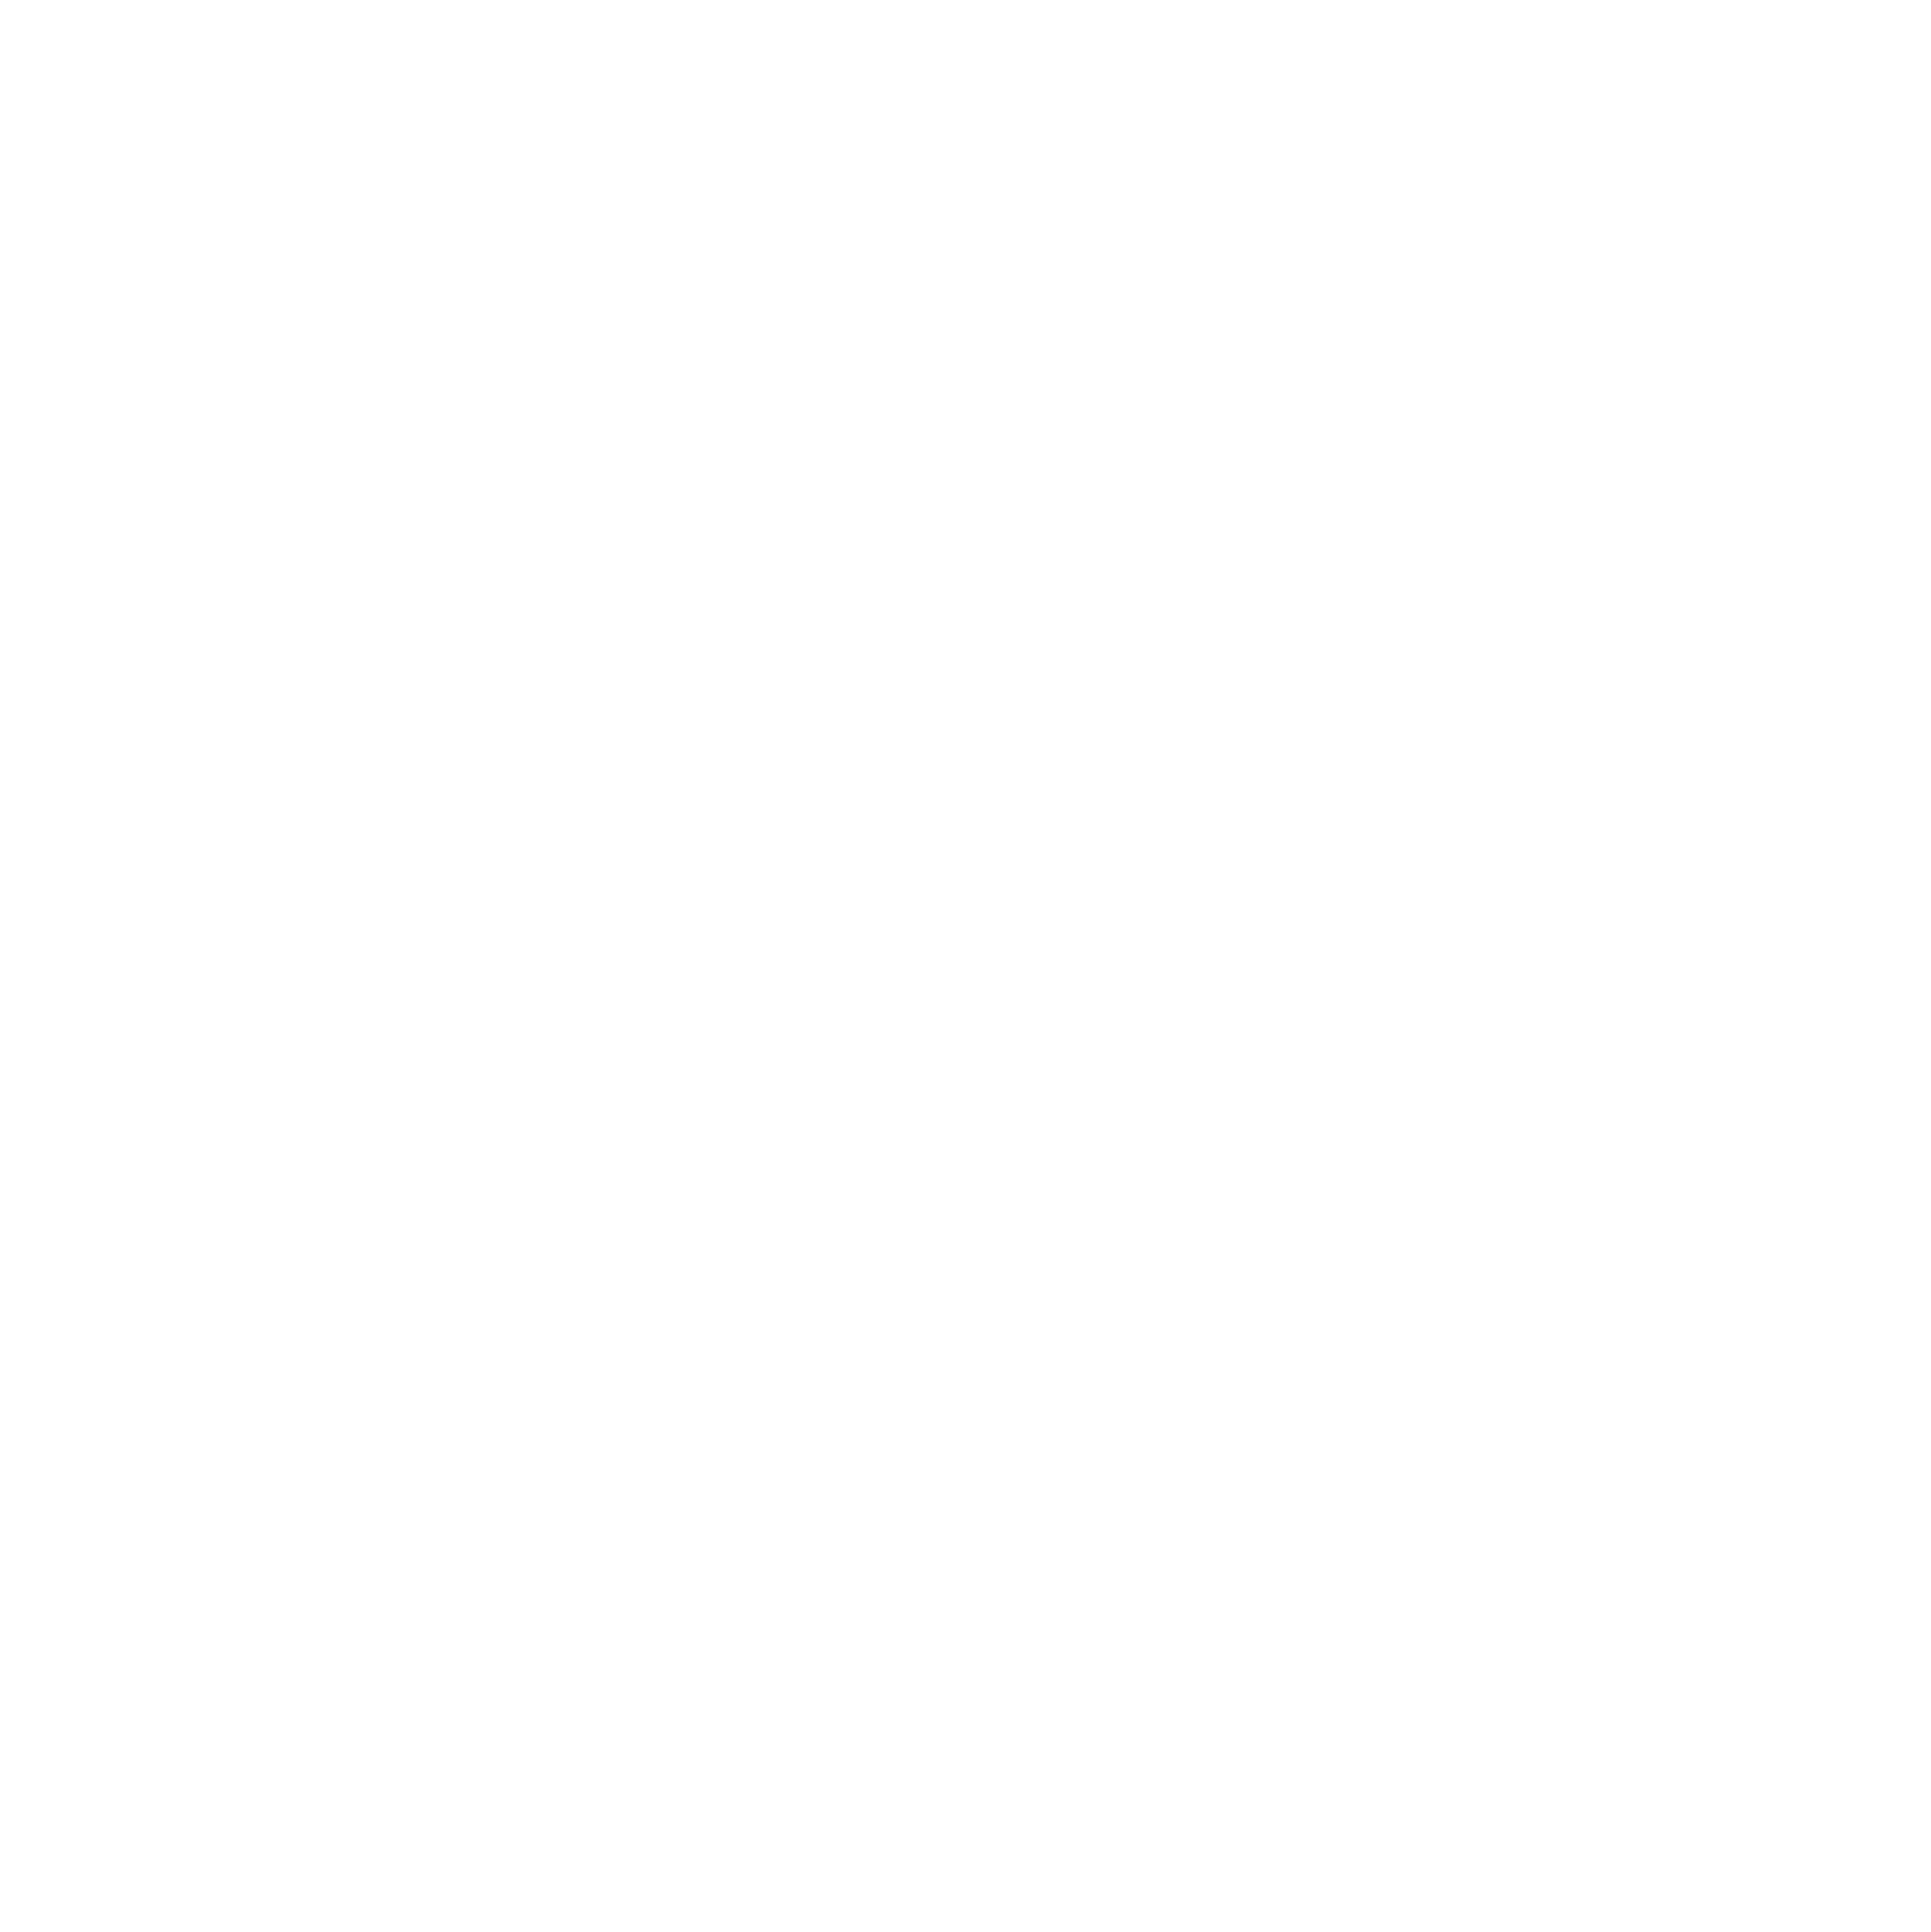 Lindsay Warland Photography